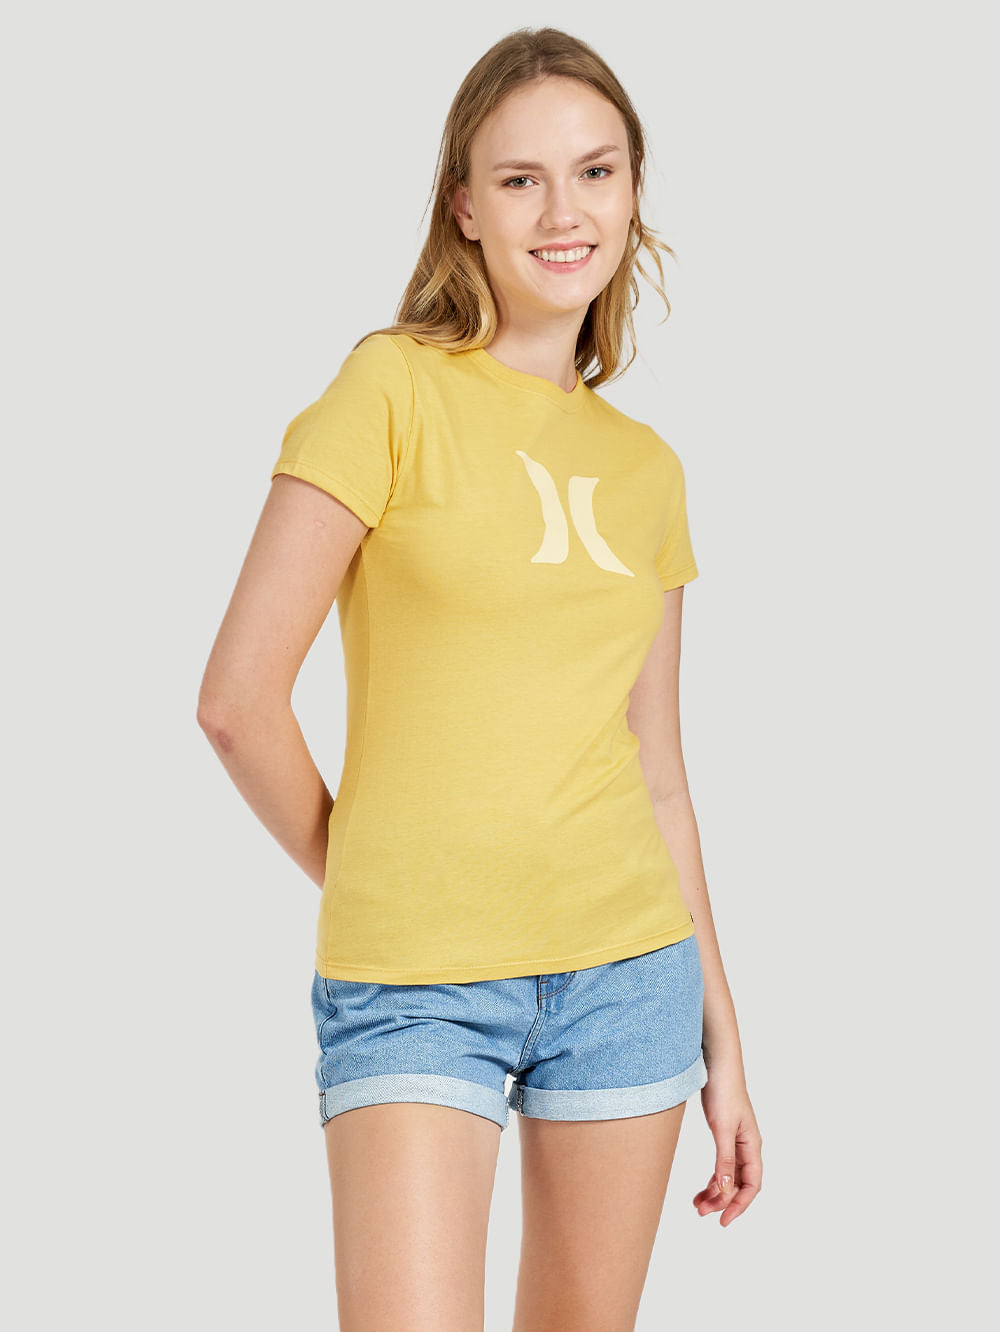 Camiseta Hurley Icon Amarela